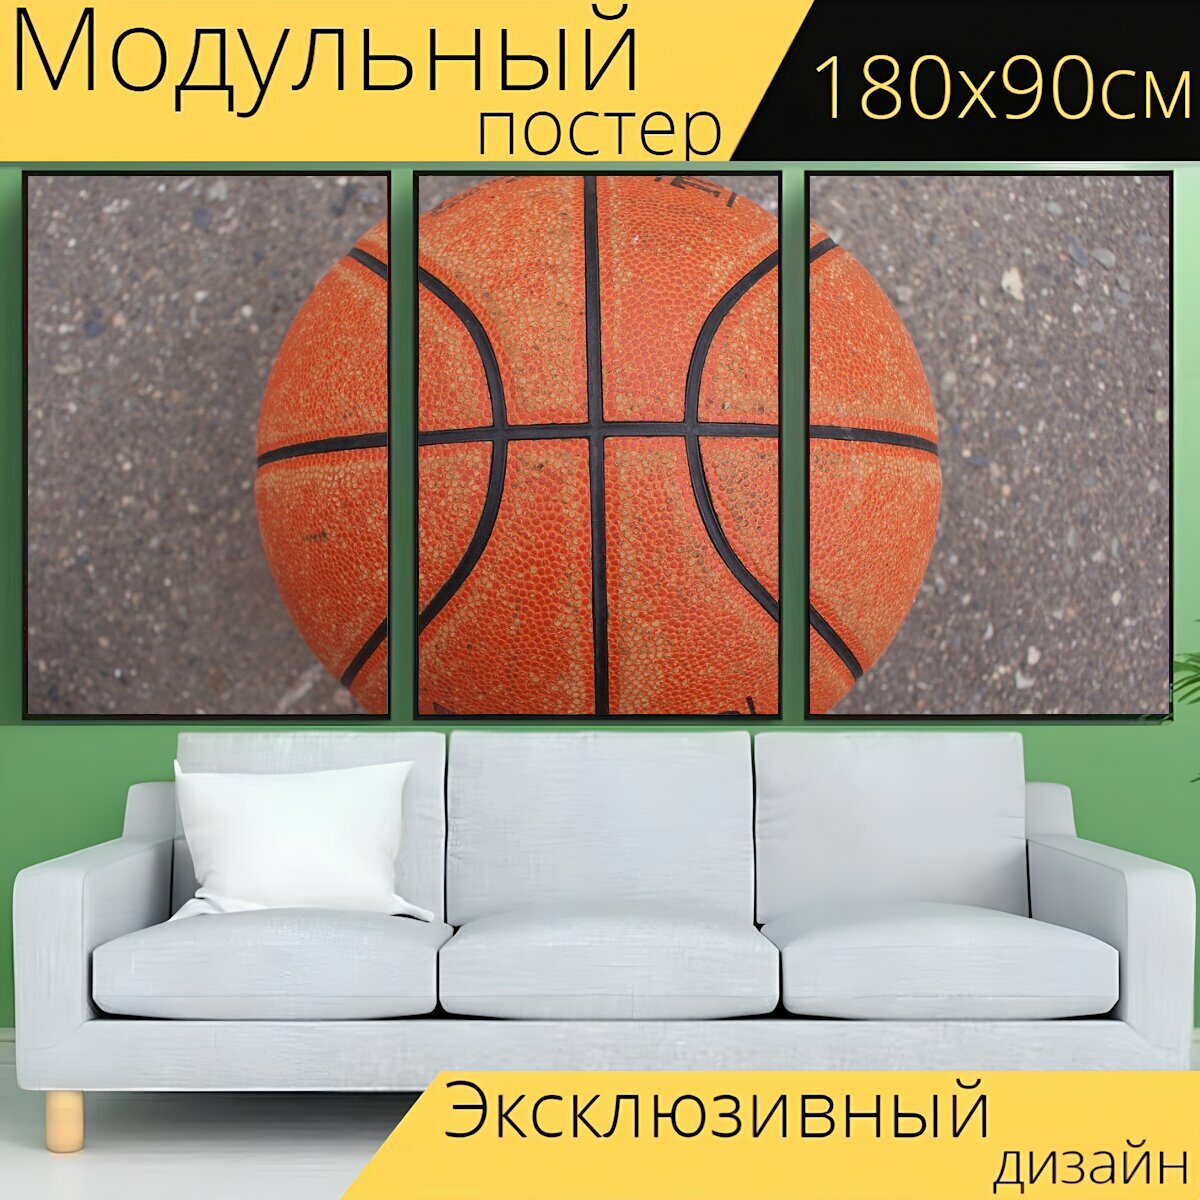 Модульный постер "Баскетбол, виды спорта, корт" 180 x 90 см. для интерьера